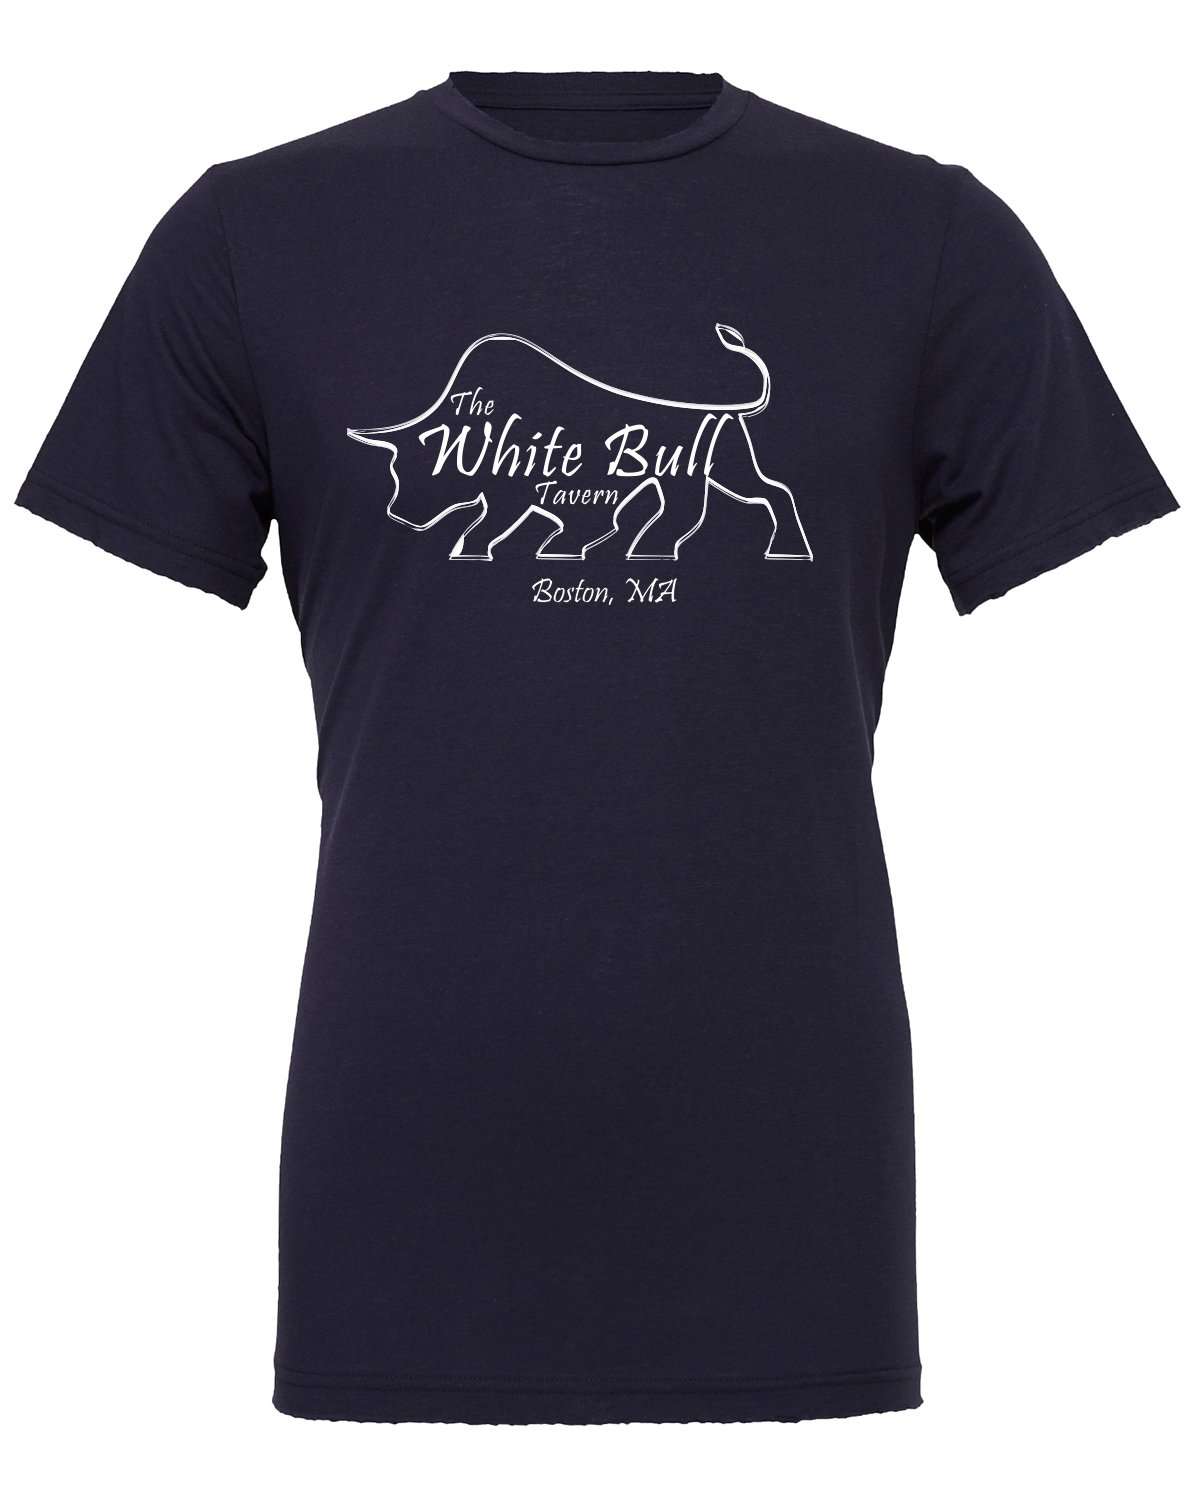 The White Bull Official Tee Shirt